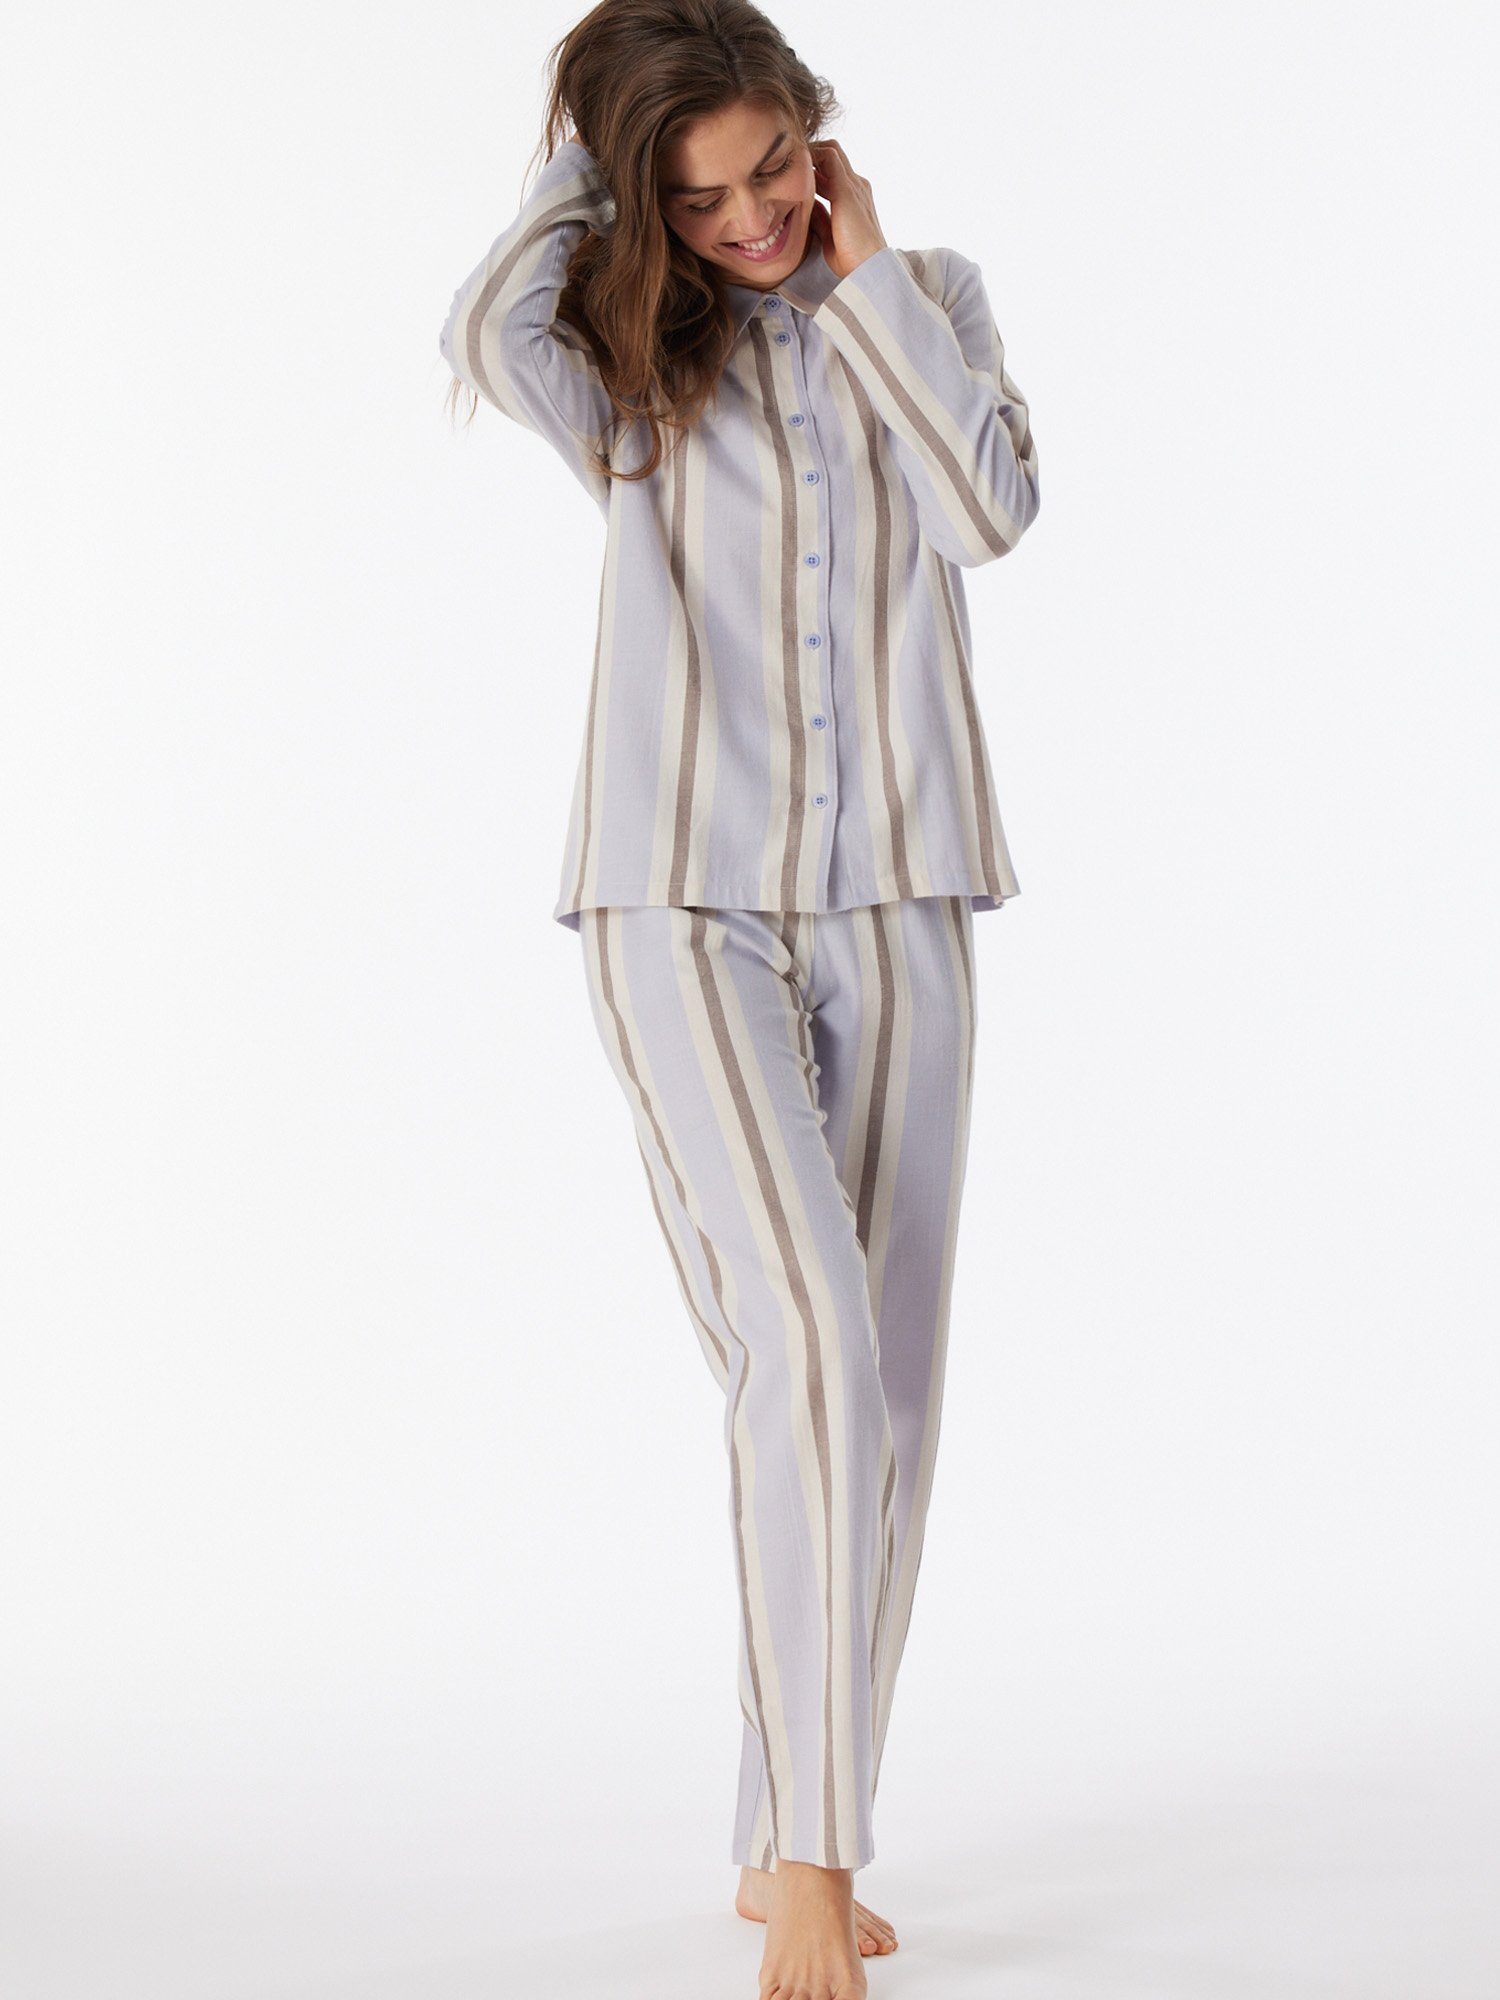 Selected schlafanzug flieder Pyjama schlafmode Schiesser pyjama Premium